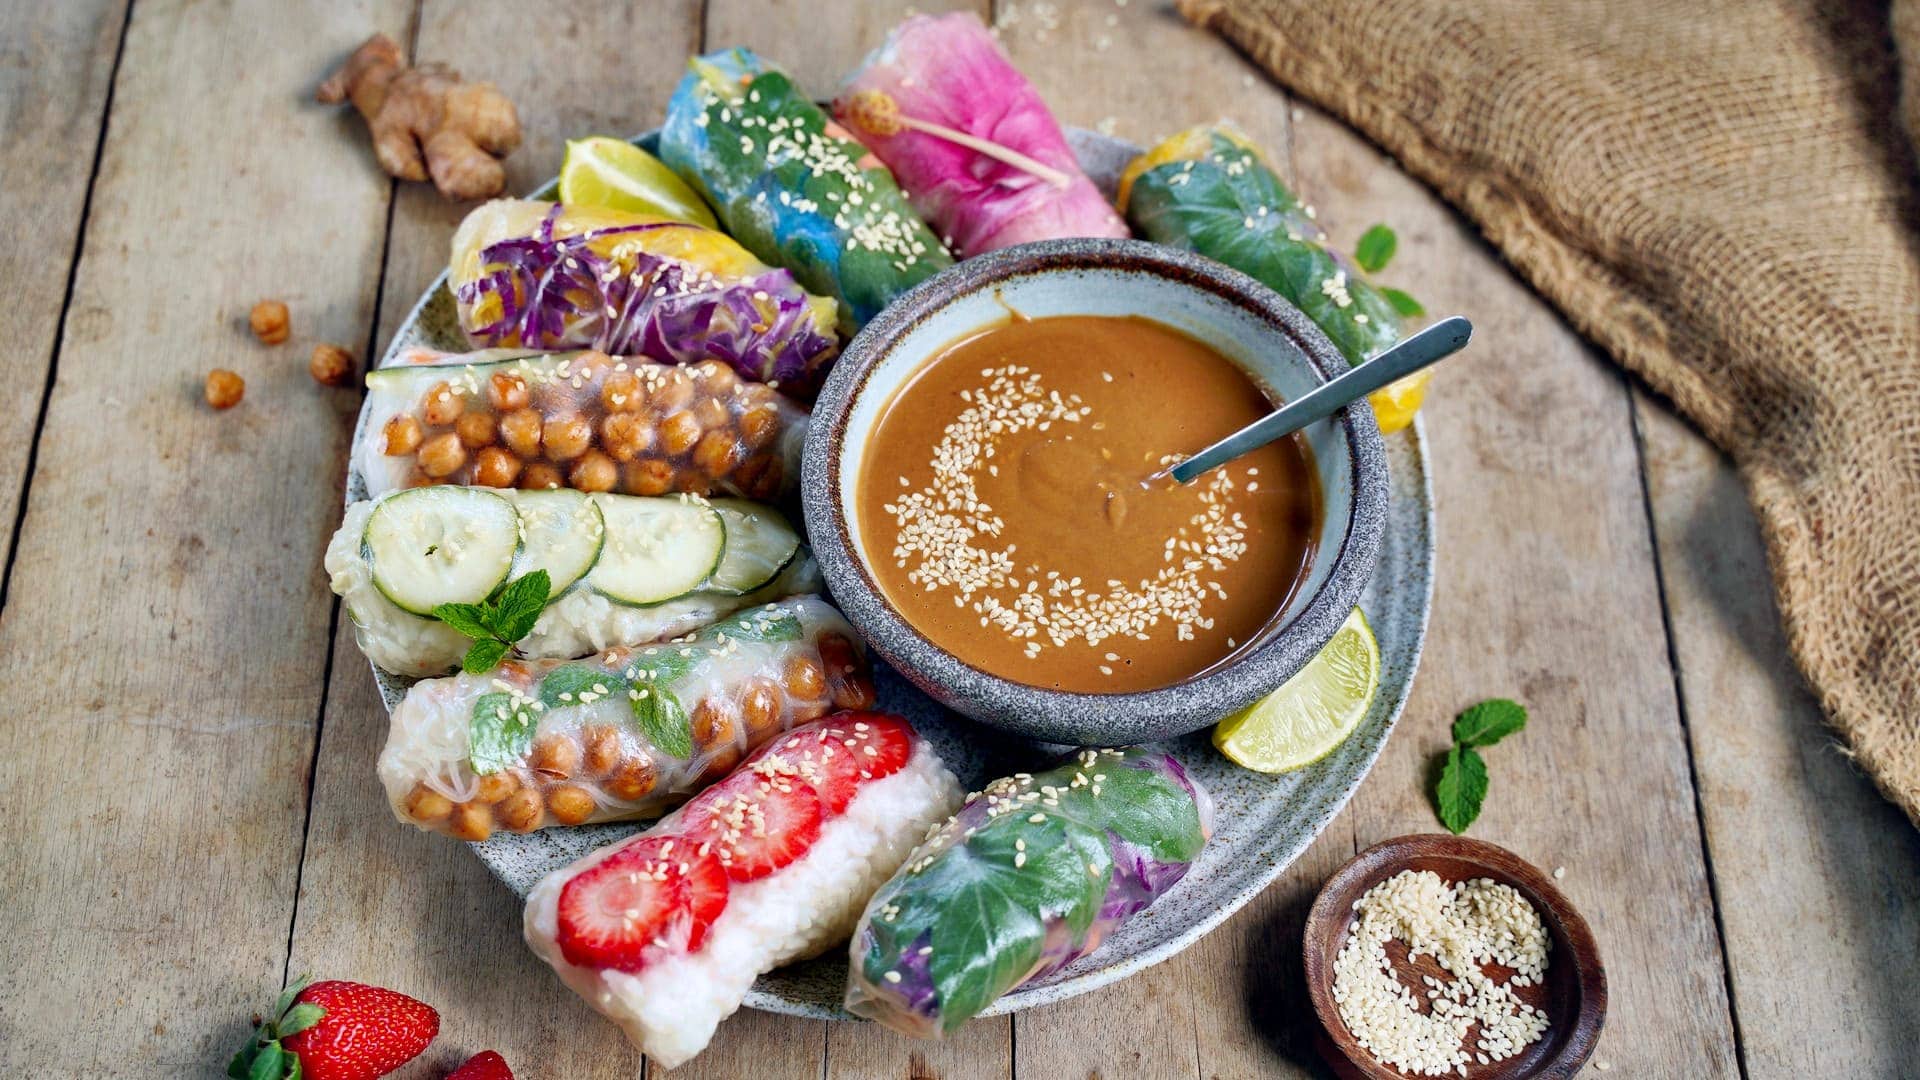 Vegan Summer Rolls Recipe with Peanut Sauce